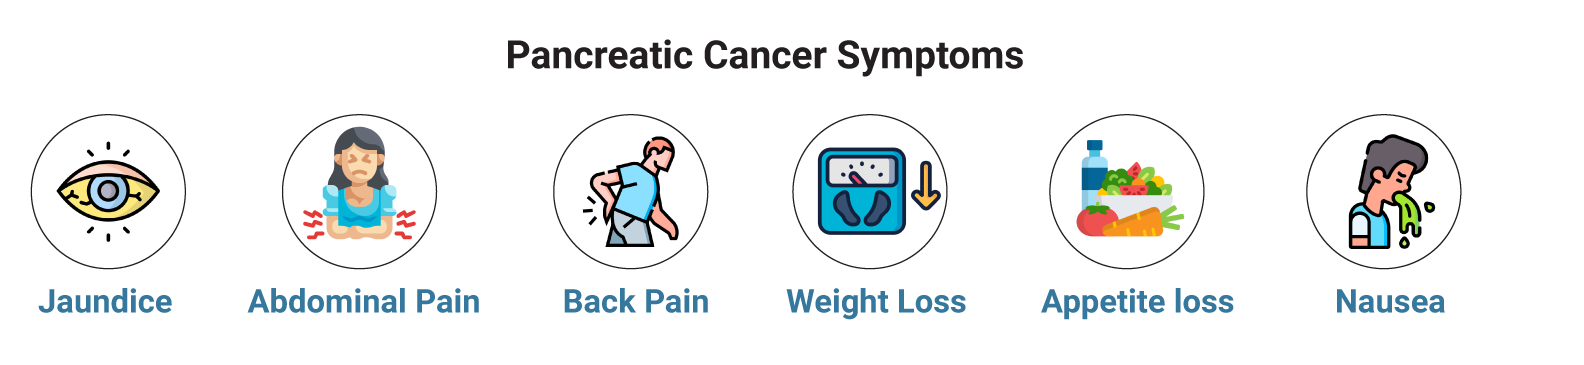 Pancreatic cancer symptoms